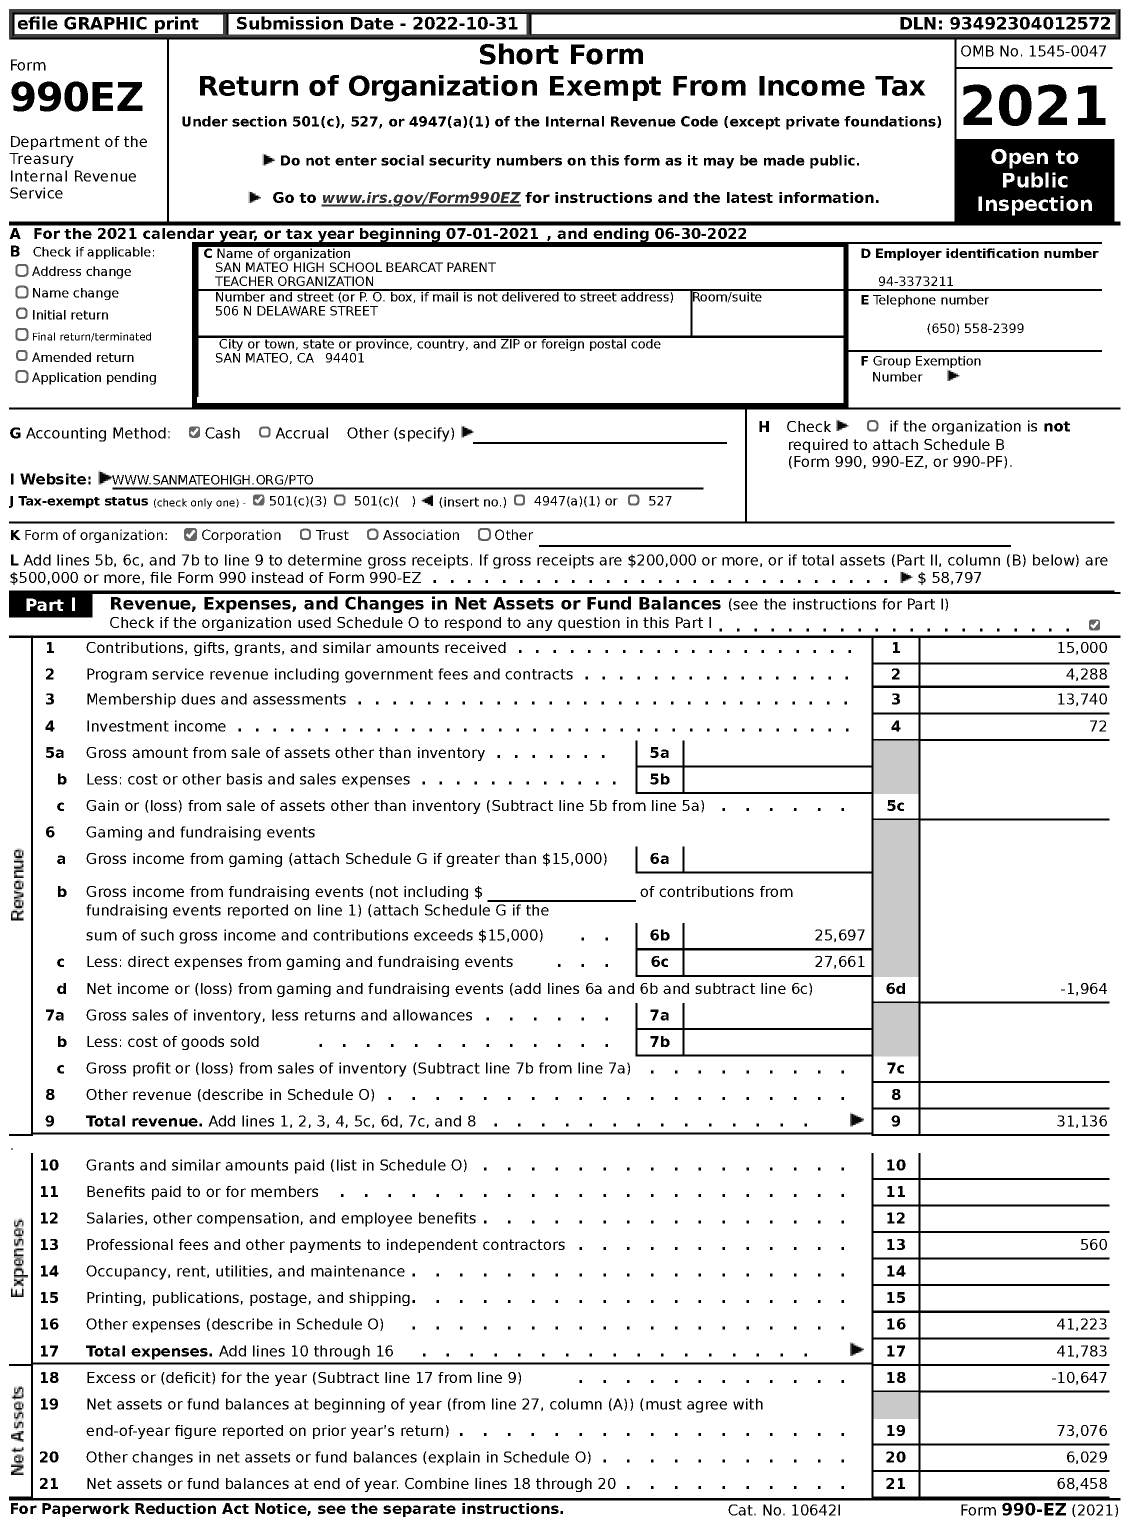 Image of first page of 2021 Form 990EZ for San Mateo High School Bearcat Parent Teacher Organization